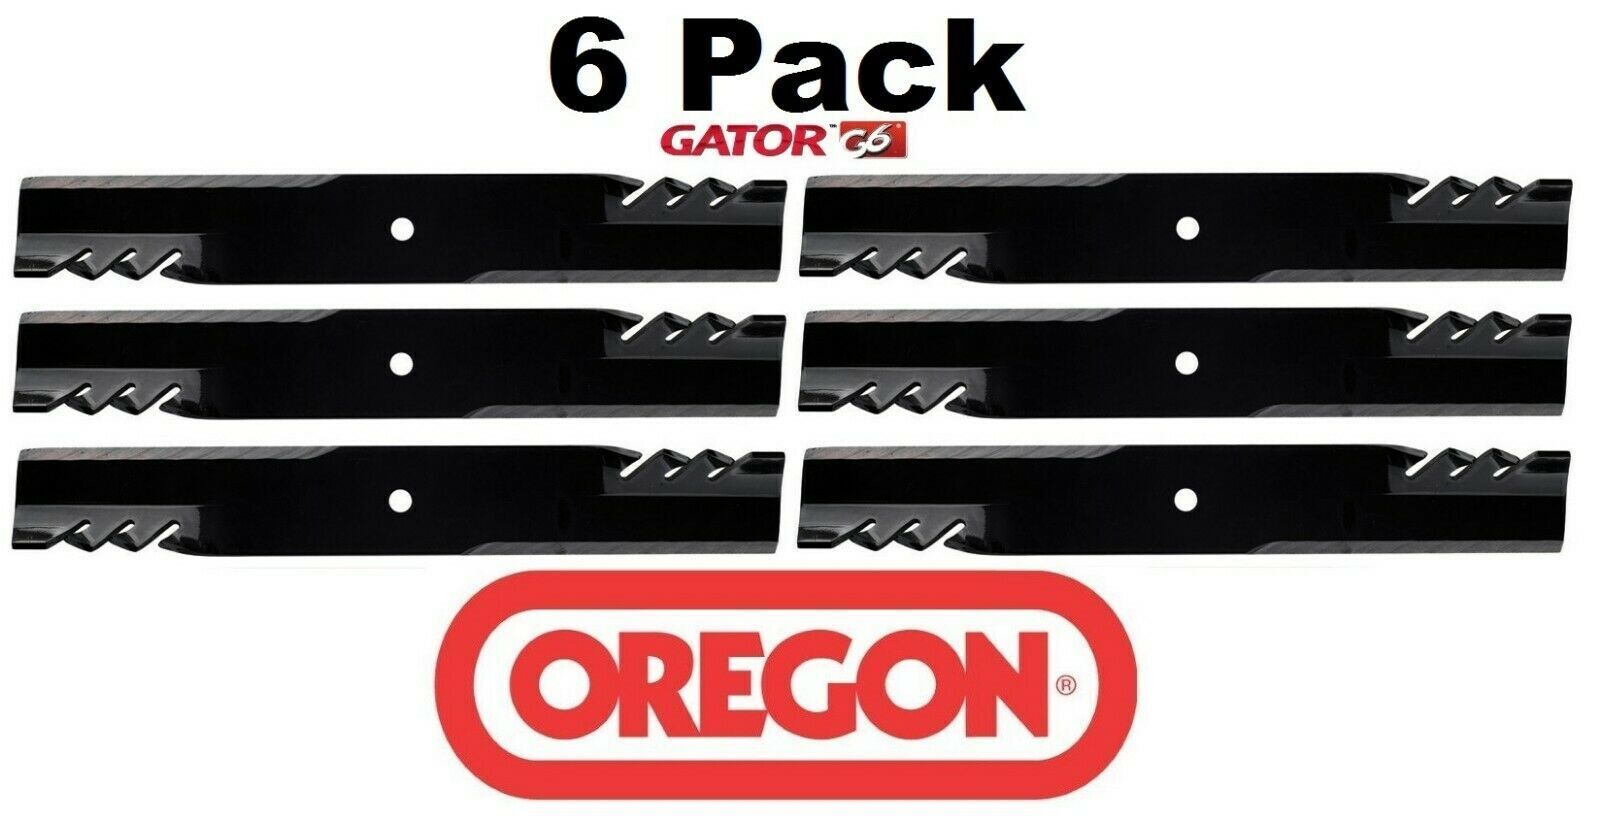 6 Pack Oregon 396-726 Mower Blade Gator G6 Giant Vac 21536 3021536